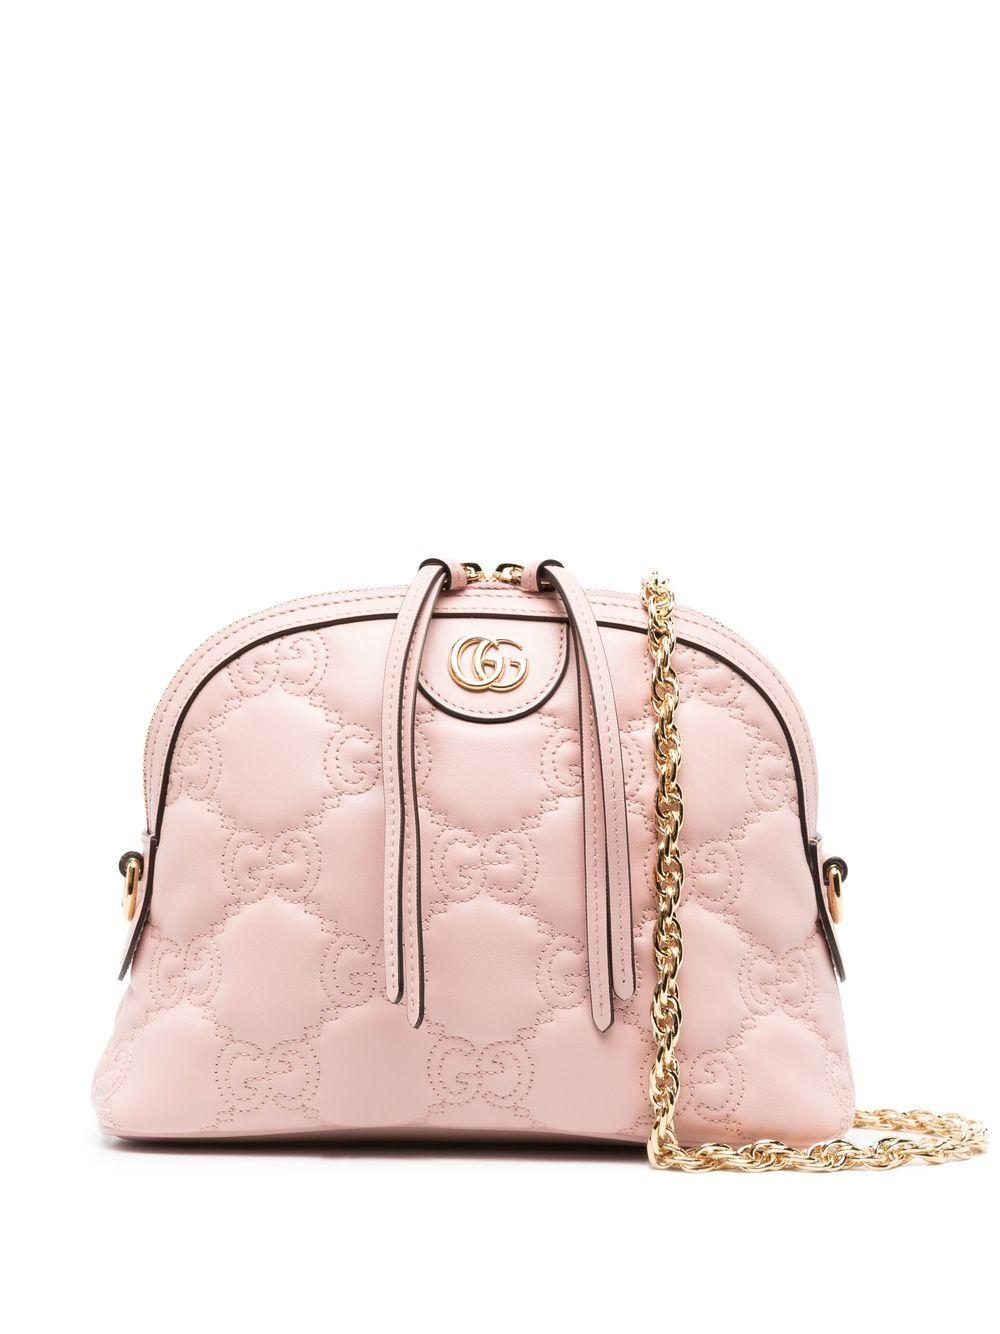 Gucci Ophidia Leather Shoulder Bag in Pink